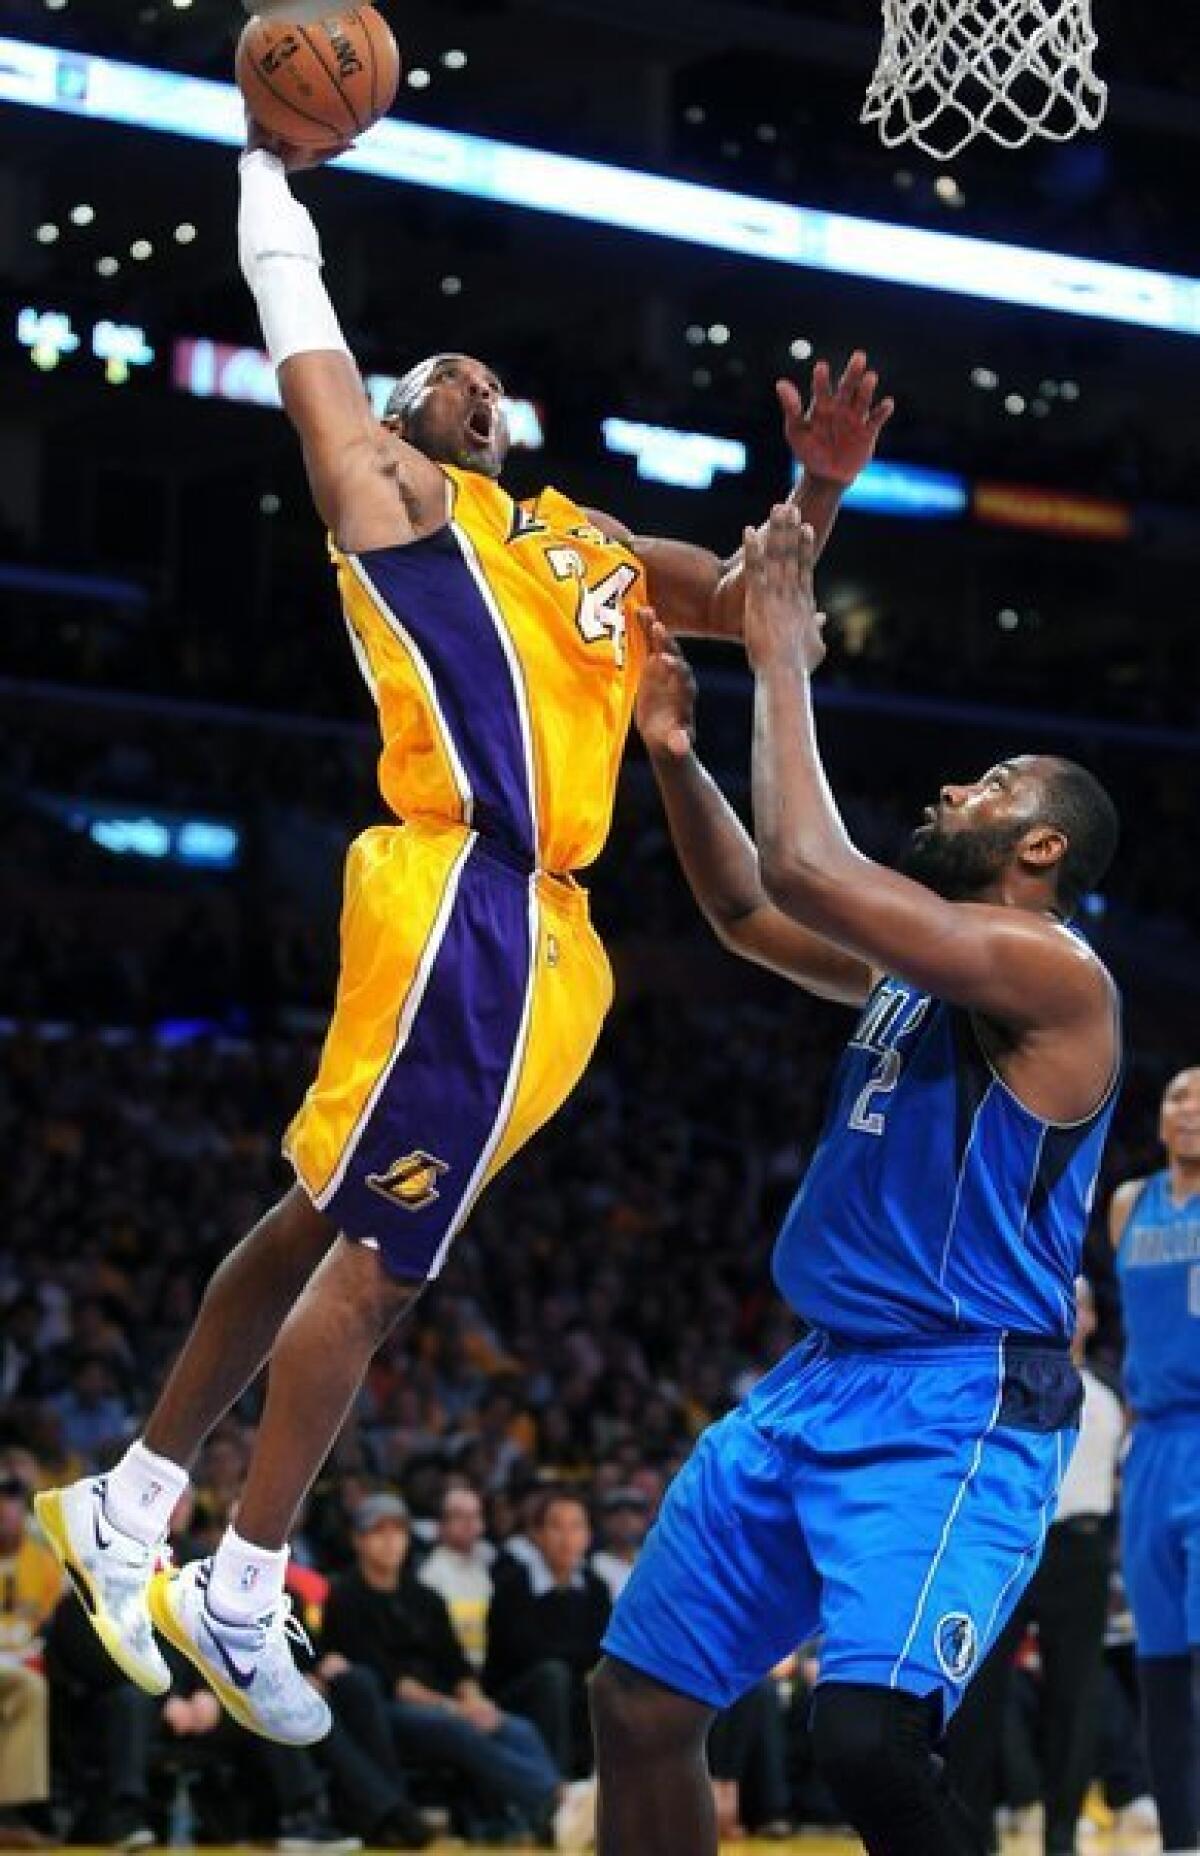 Lakers guard Kobe Bryant goes baseline for a dunk over Dallas Mavericks forward Elton Brand.